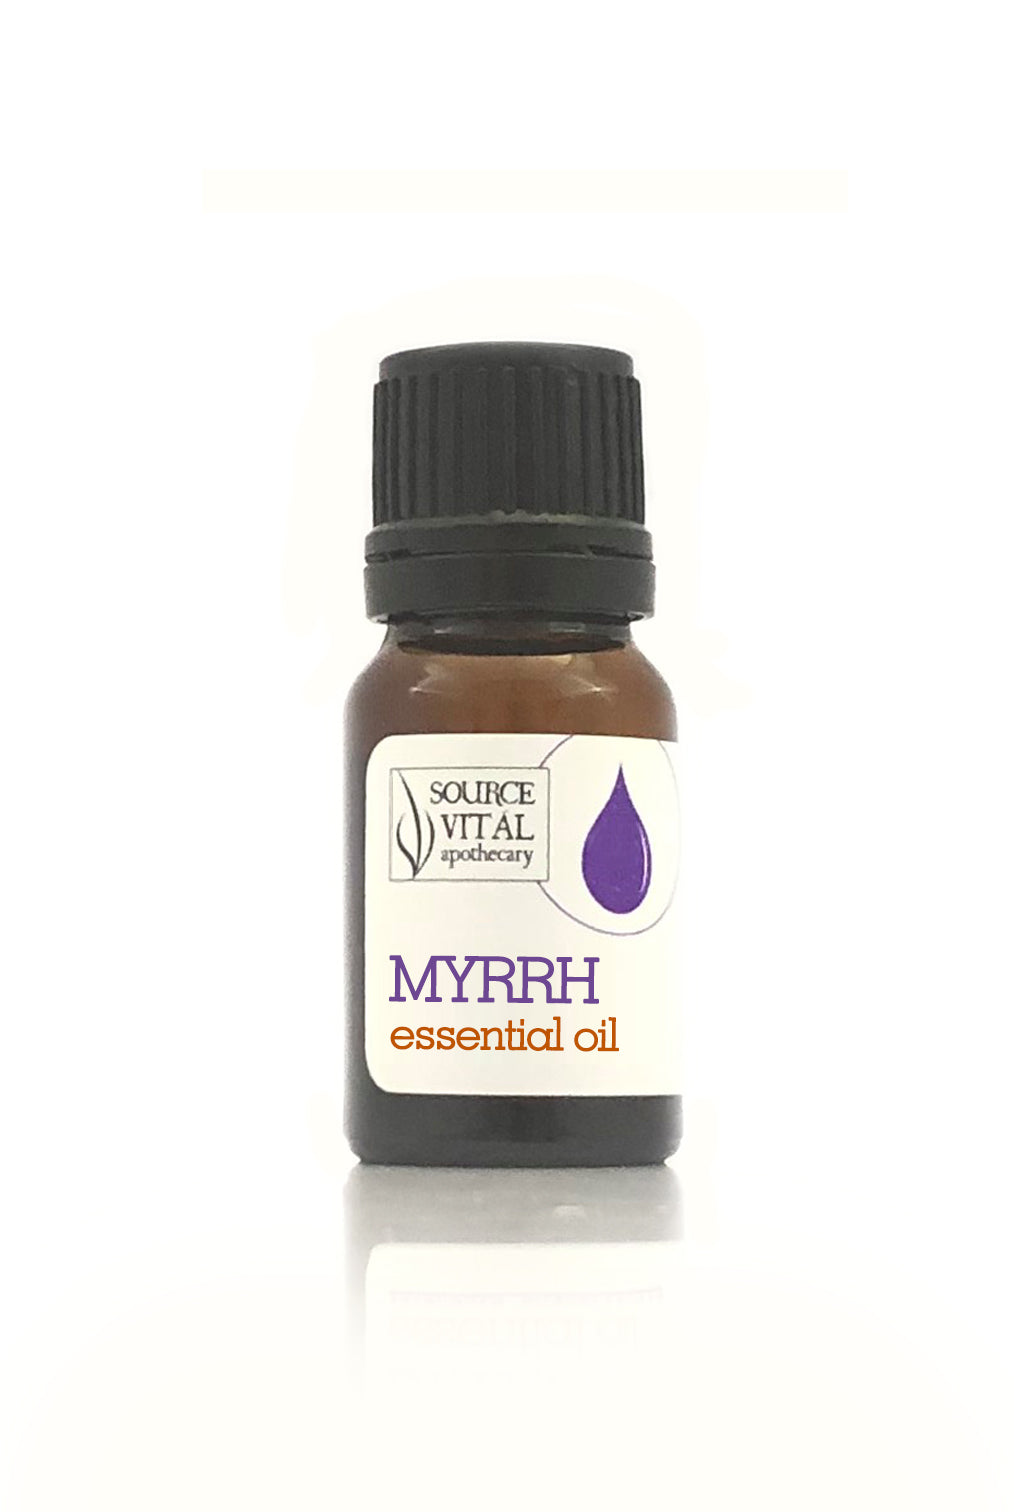 Source Vital Apothecary Myrrh Essential Oil - 0.4 fl. oz.